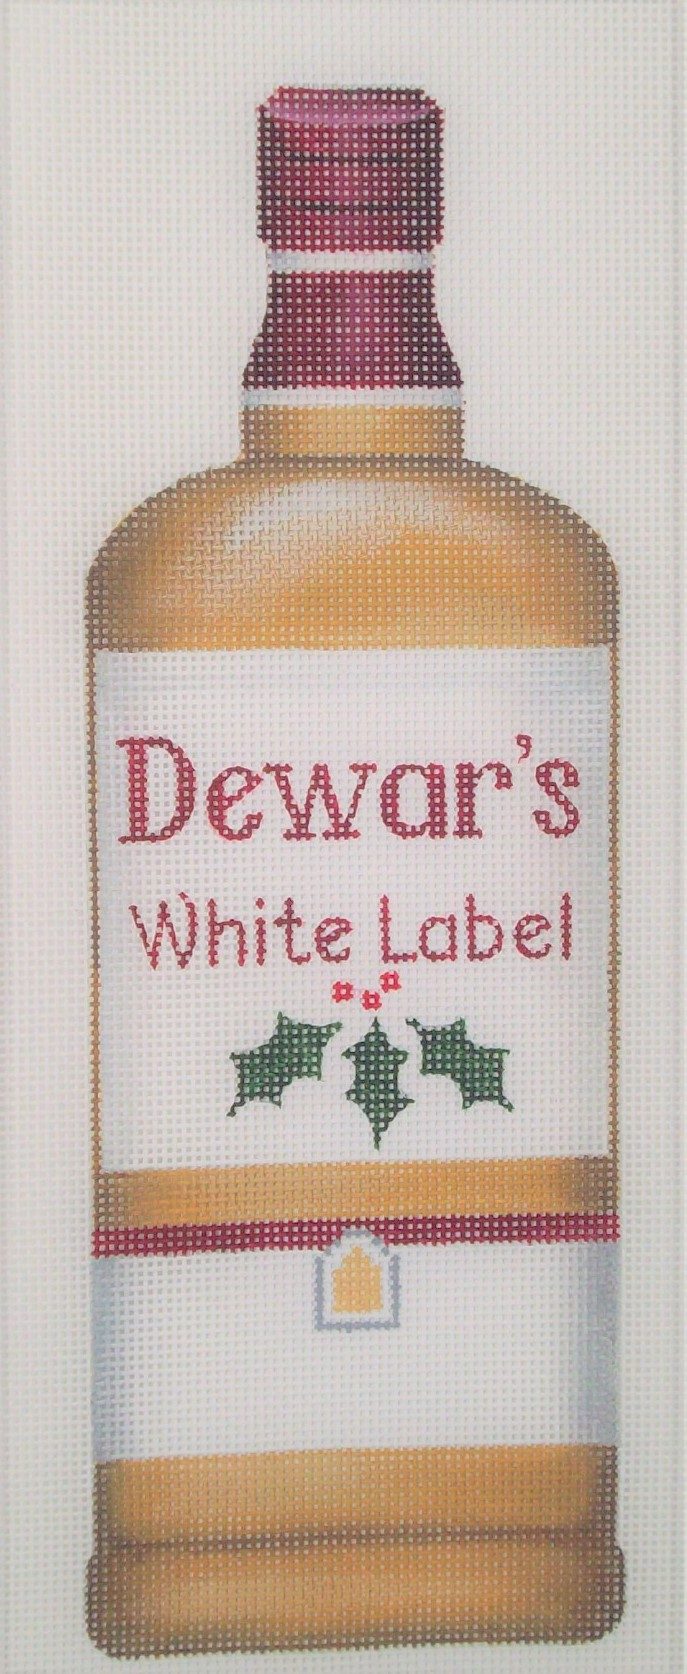 Dewar's Scotch Ornament